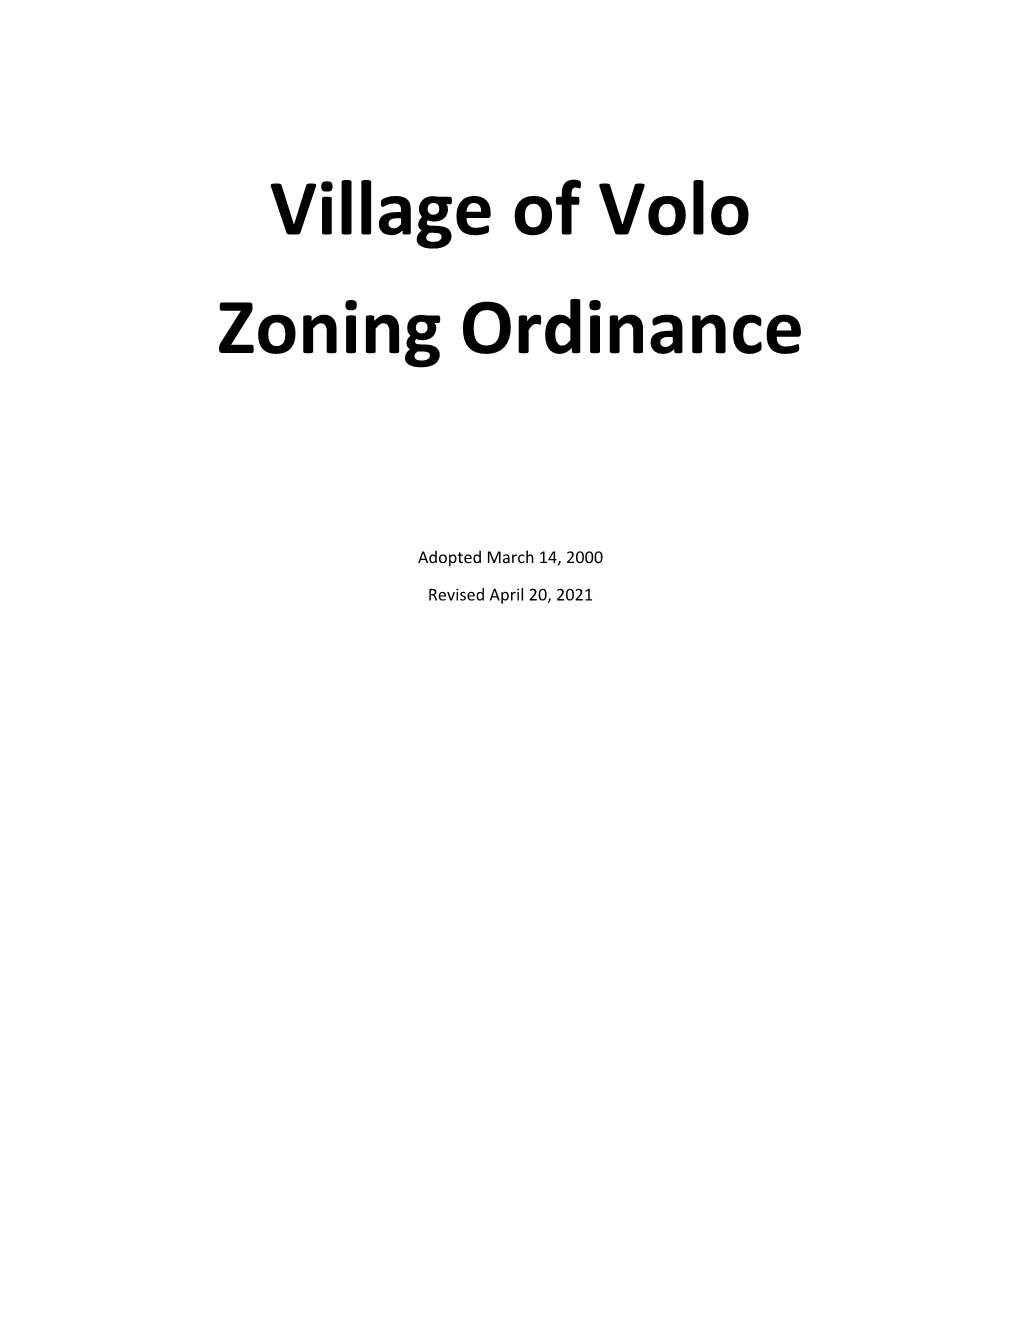 Village of Volo Zoning Ordinance